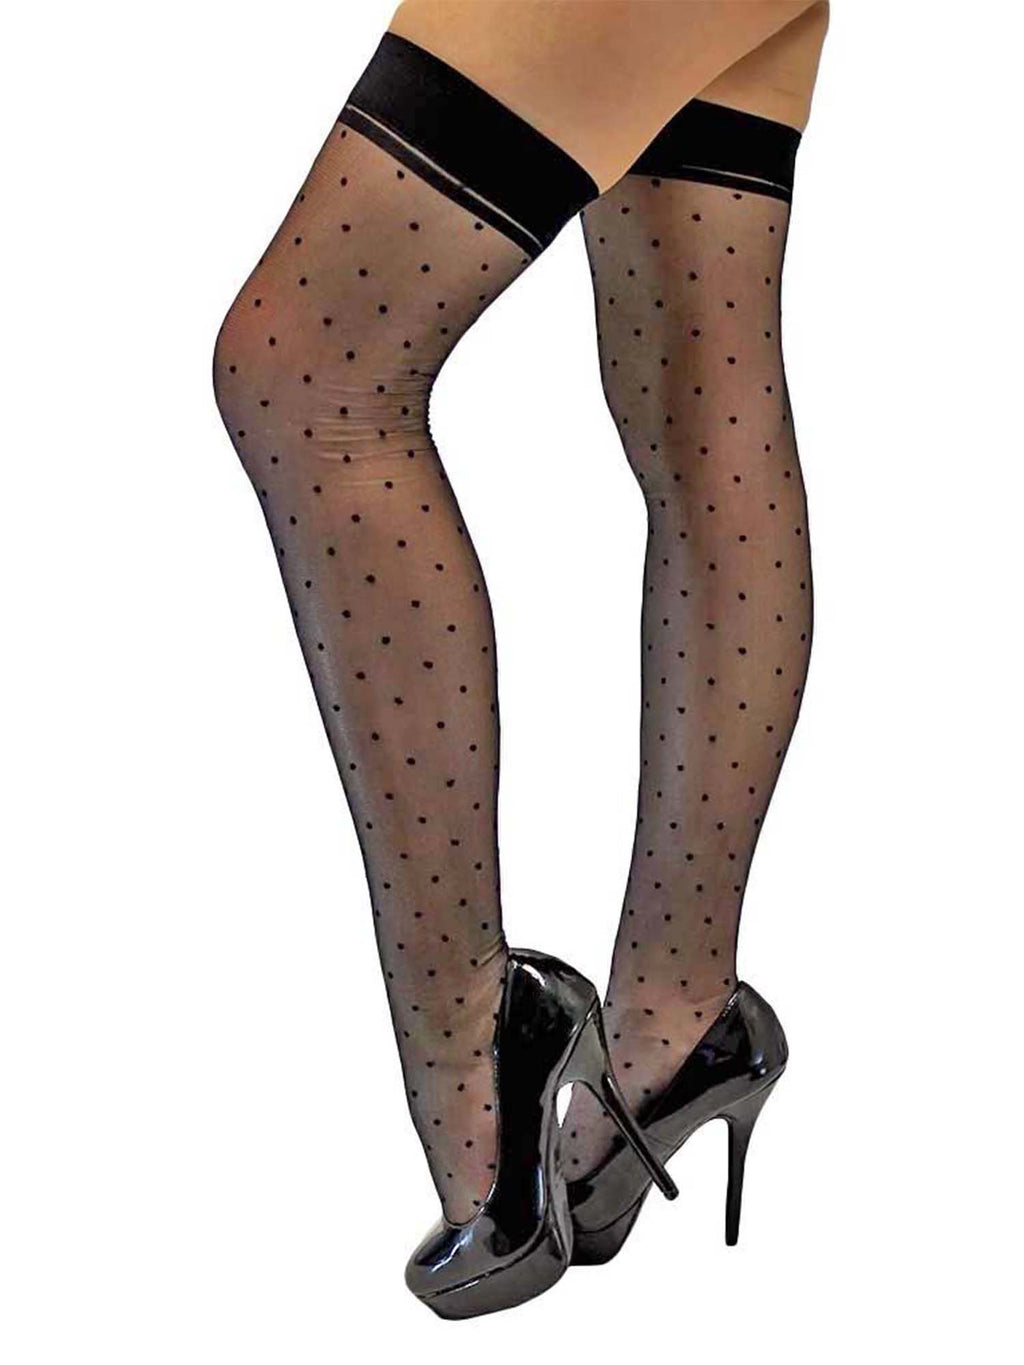 Black Polka Dot Sheer Thigh High Stockings